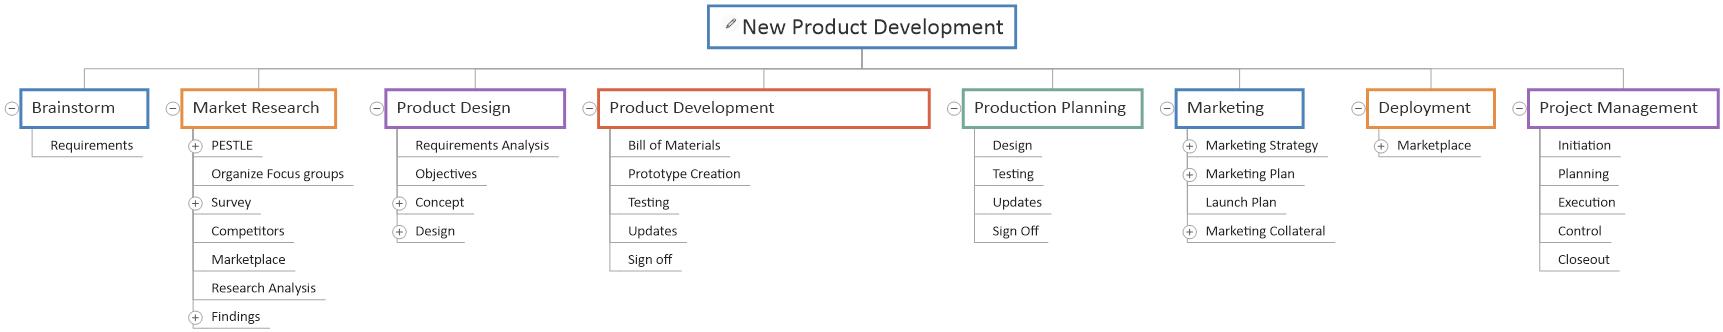 New Product Development Gantt Chart